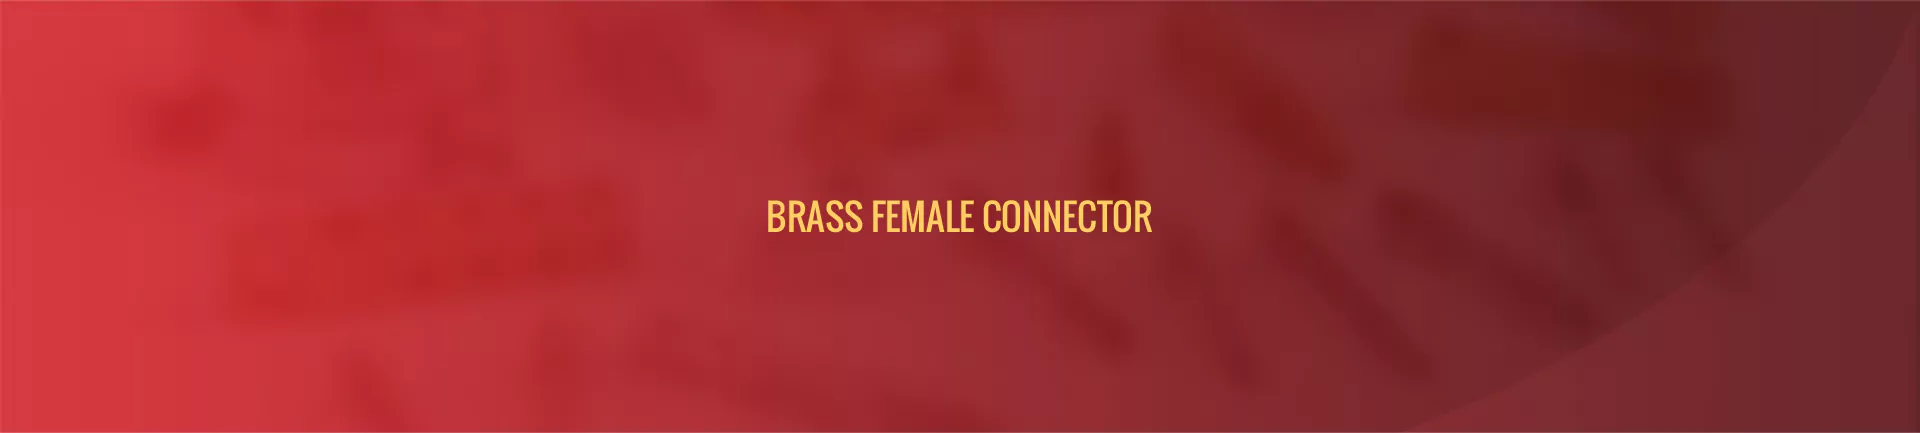 brass_female_connector-banner